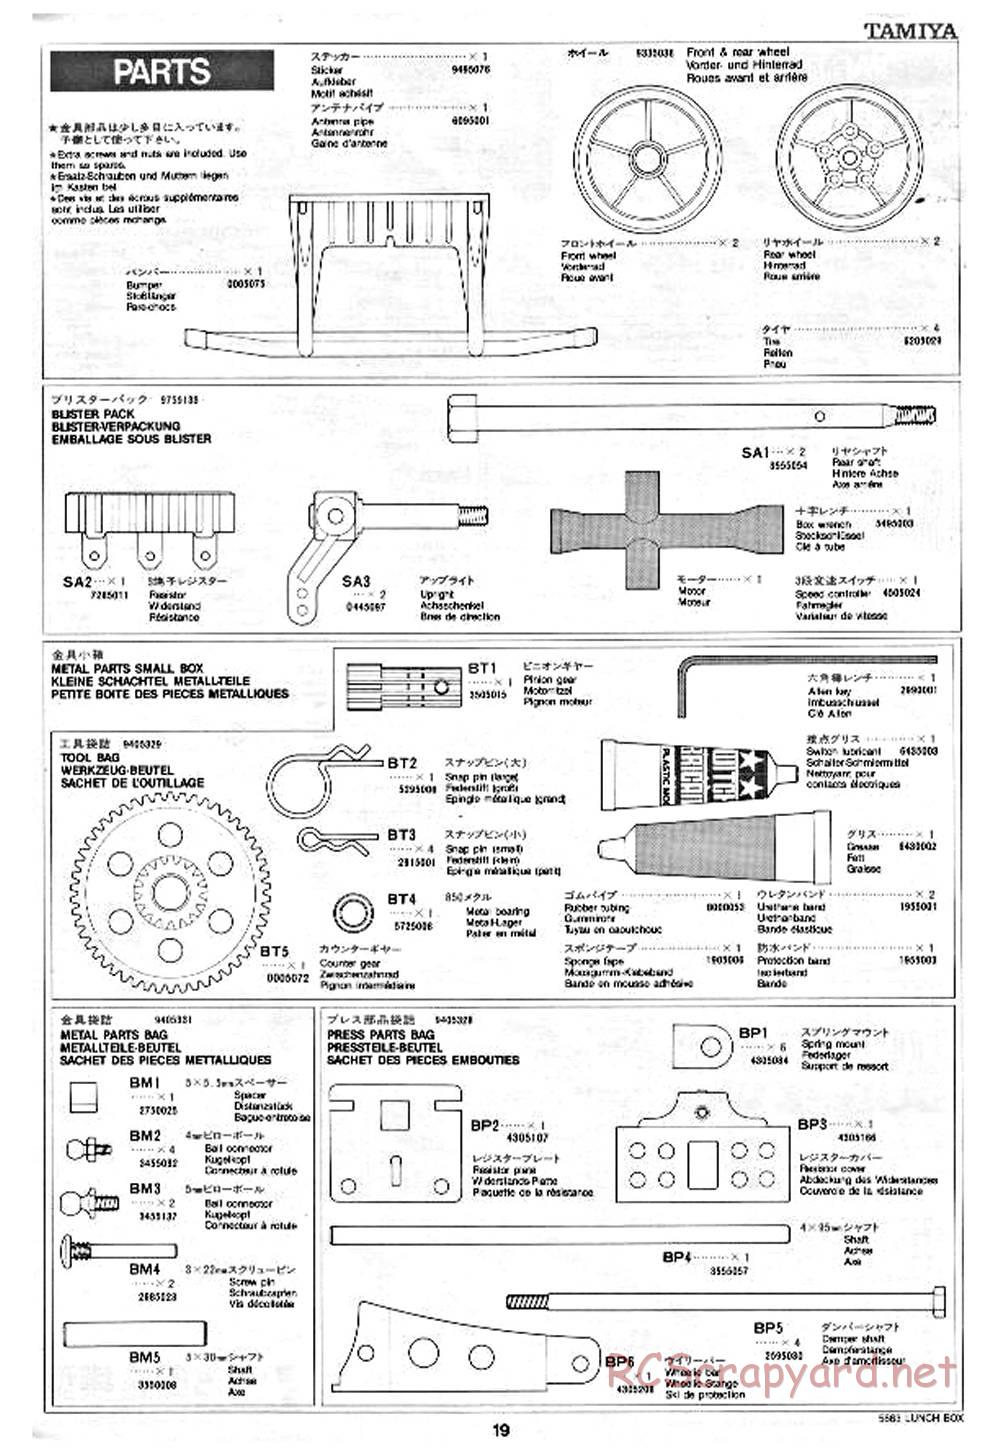 Tamiya - Lunchbox - 58063 - Manual - Page 19